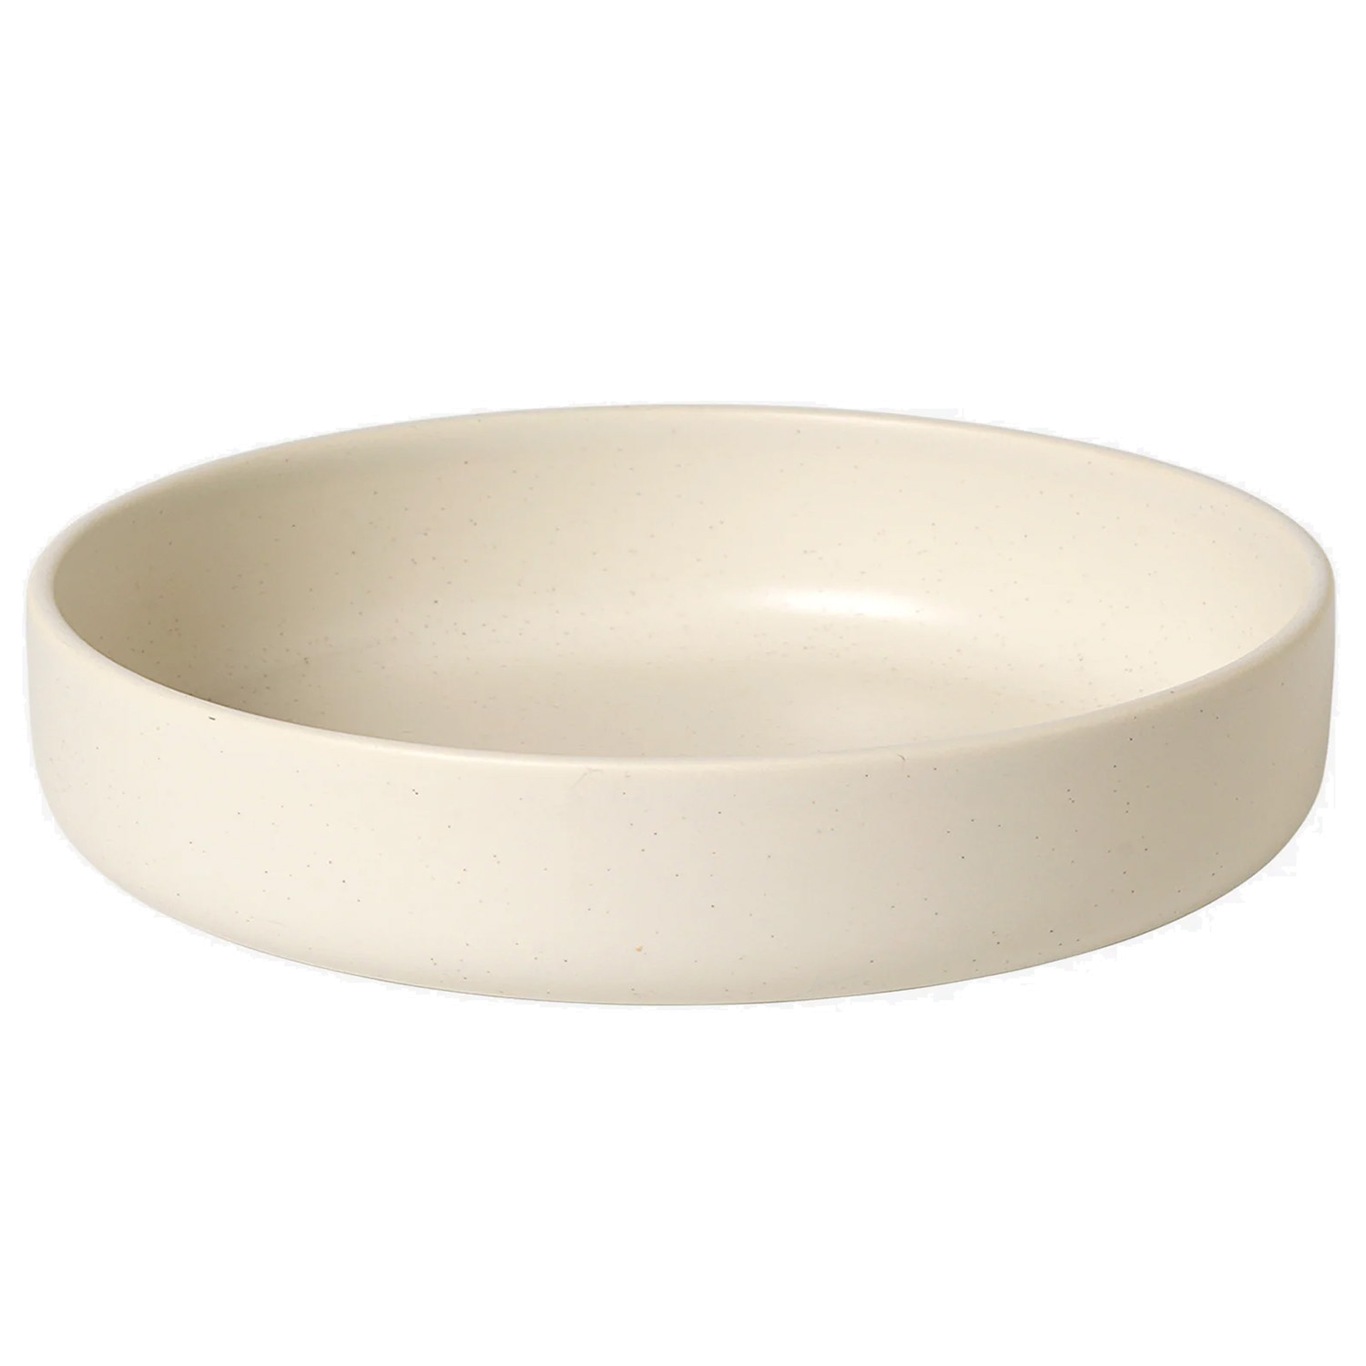 Ceramic Pisu Plate Ø21 cm, Vanilla White